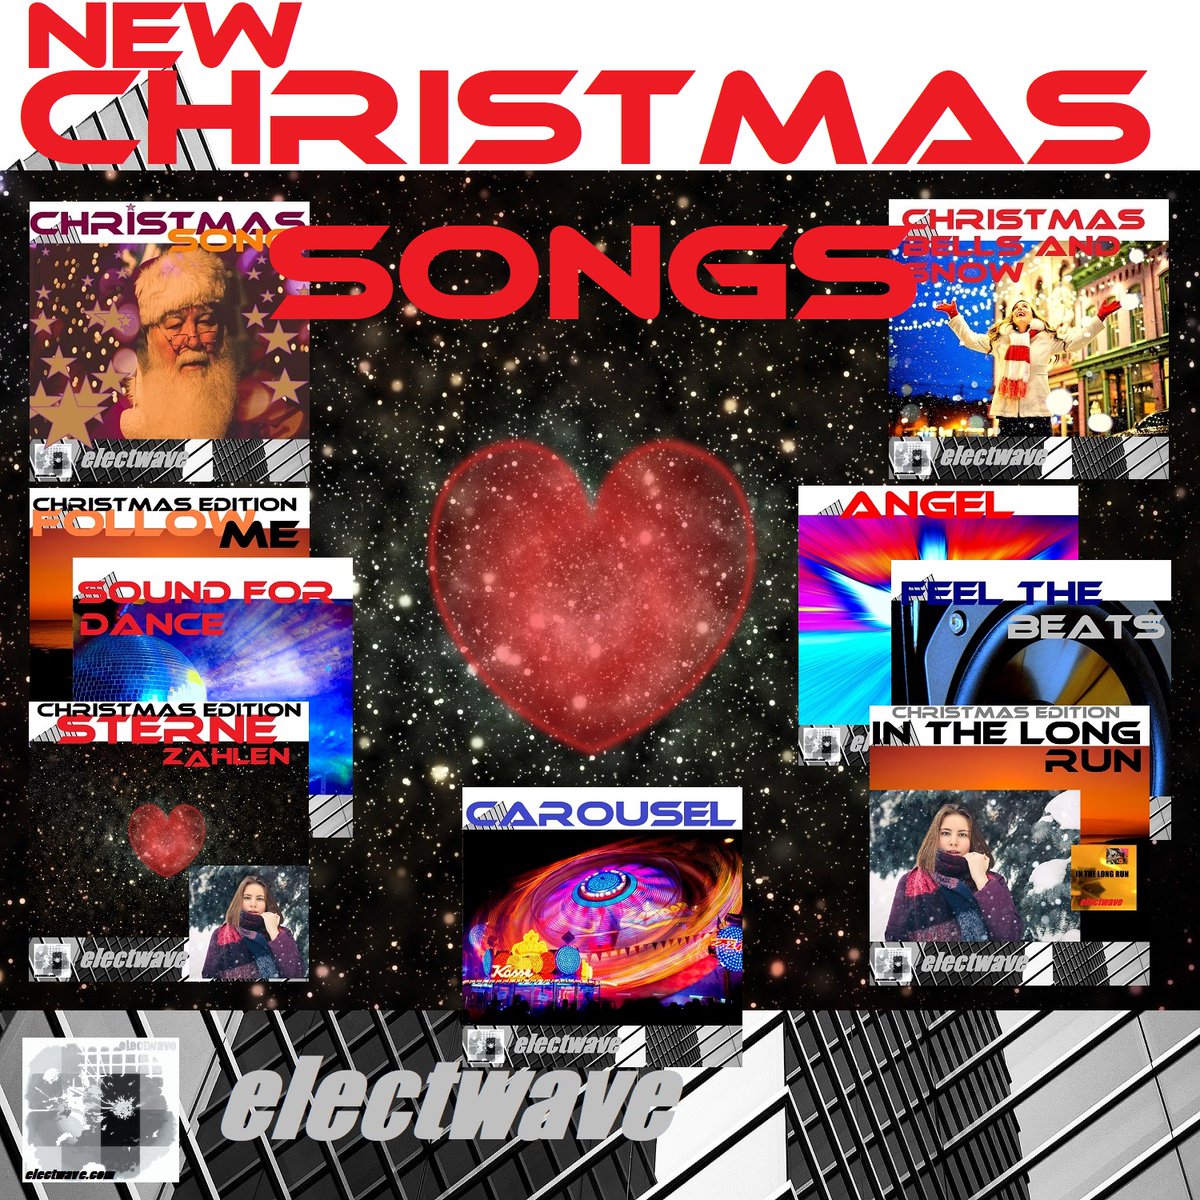 NEW CHRISTMAS SONGS - electwave ❄️🎅🎄🌠
#NewChristmasSongs #electwave
#Album 12 #Christmassongs #Christmas #Xmas  #MerryChristmas #Christmassong #Christmasmusic #Spotify #Apple #GoogleMusic #Amazon #YouTube #Deezer #TIDAL etc.
open.spotify.com/album/2gqBuXUI…